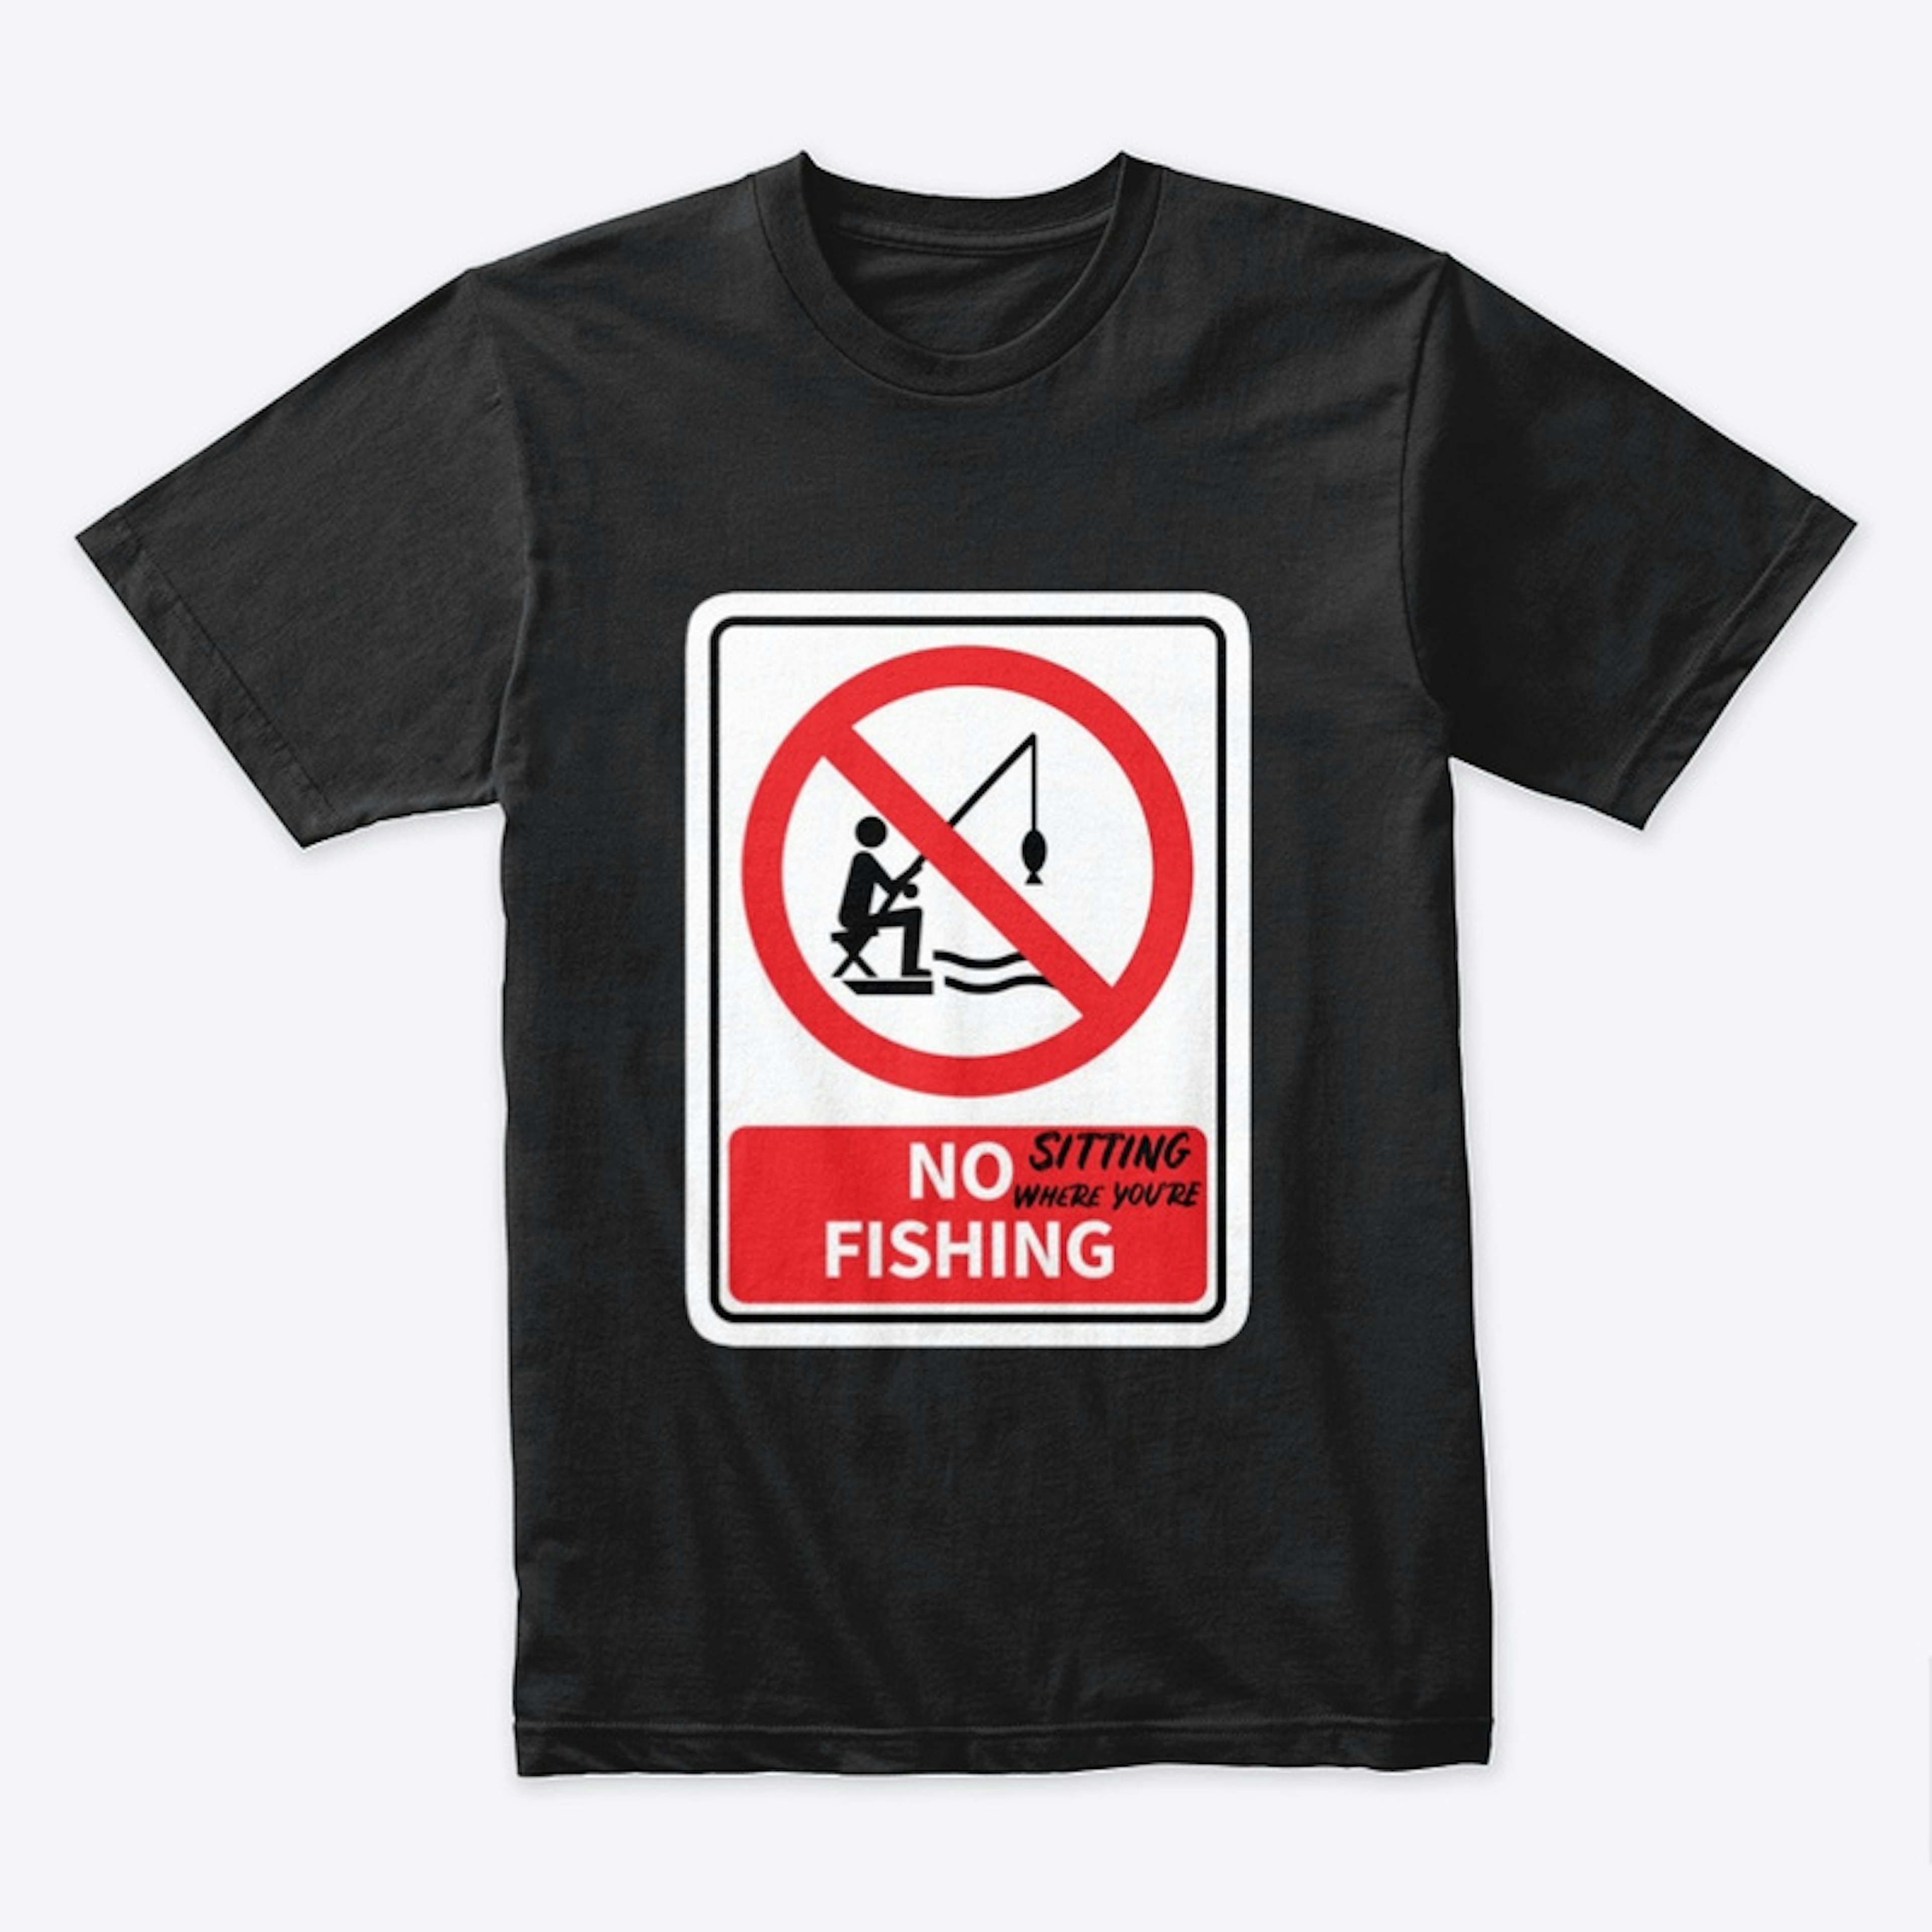 NO sitting where you're FISHING